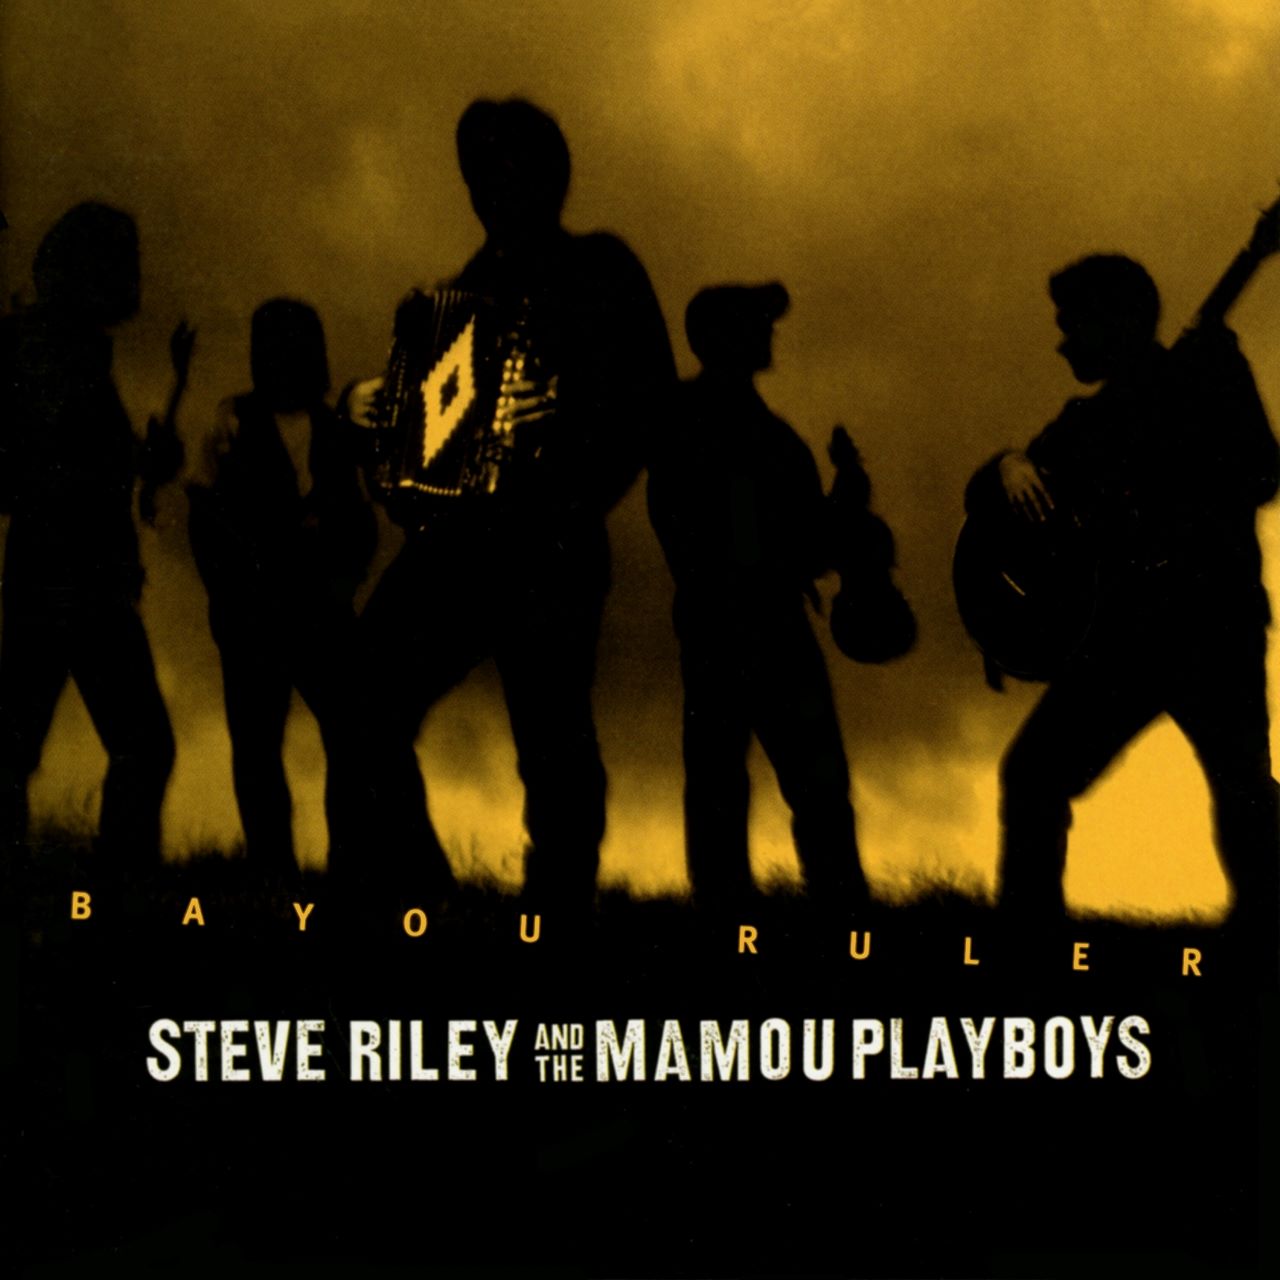 Steve Riley & The Mamou Playboys - Bayou Ruler cover album